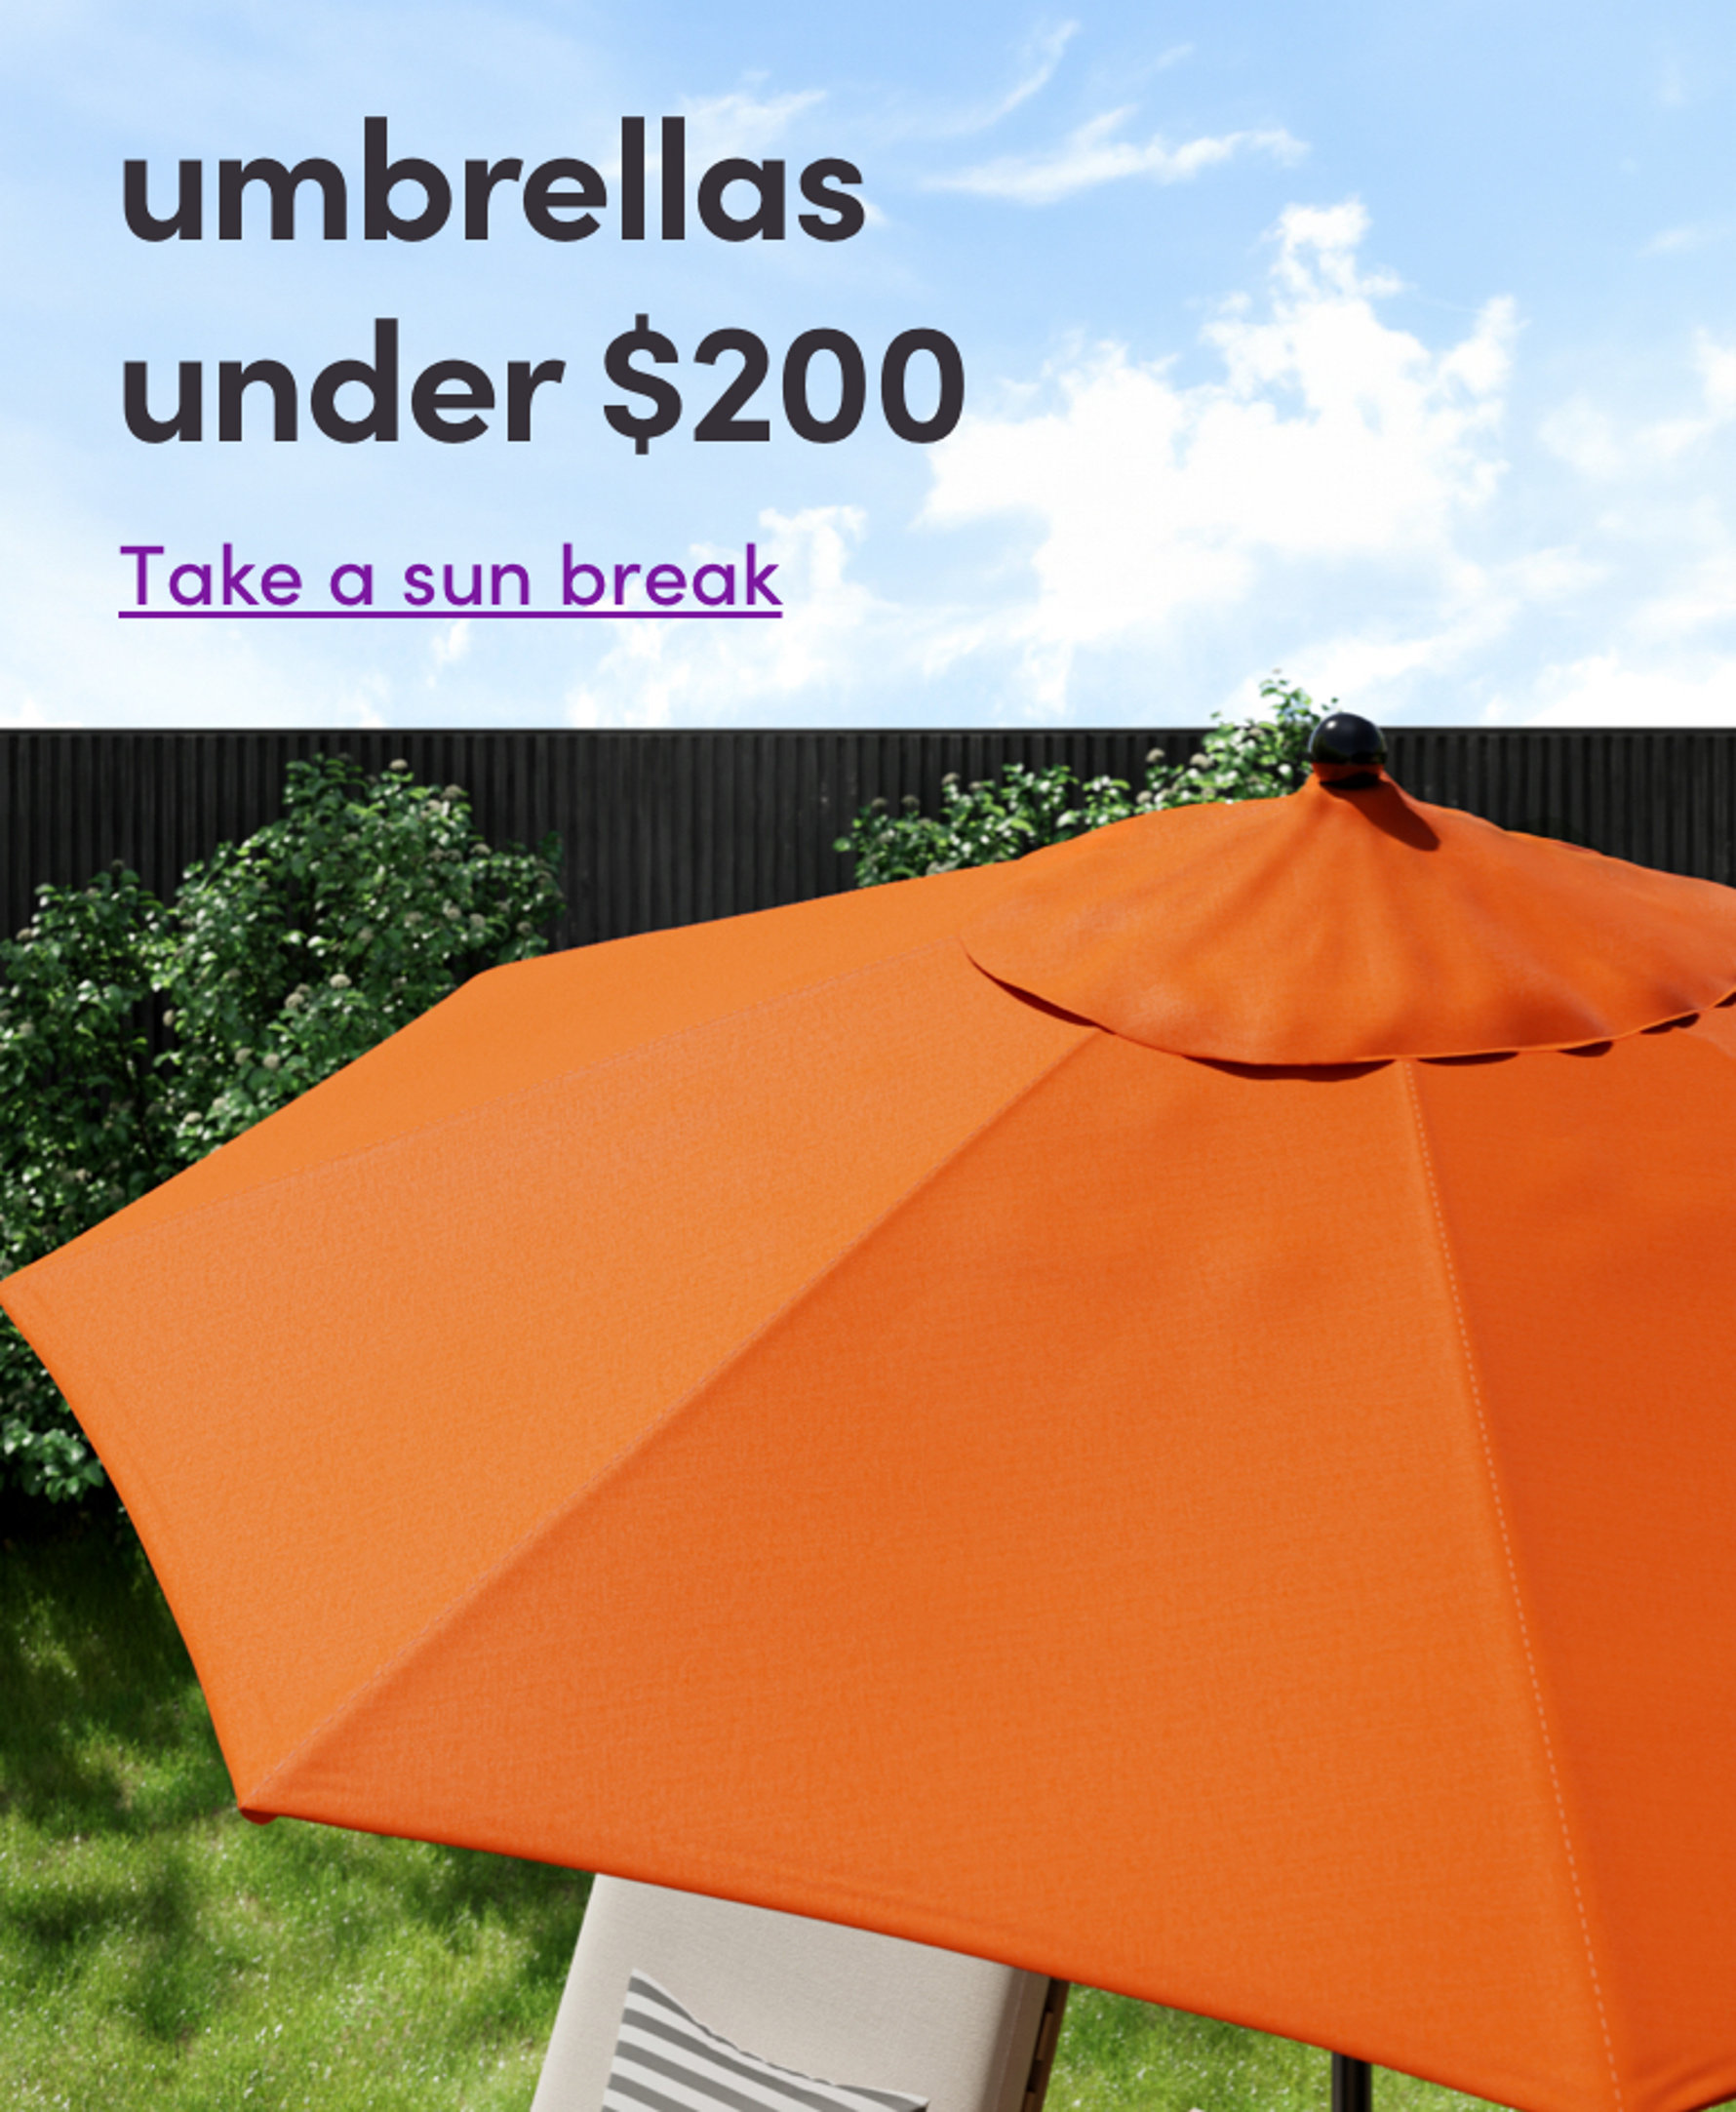 Patio umbrellas under $200. Take a sun break